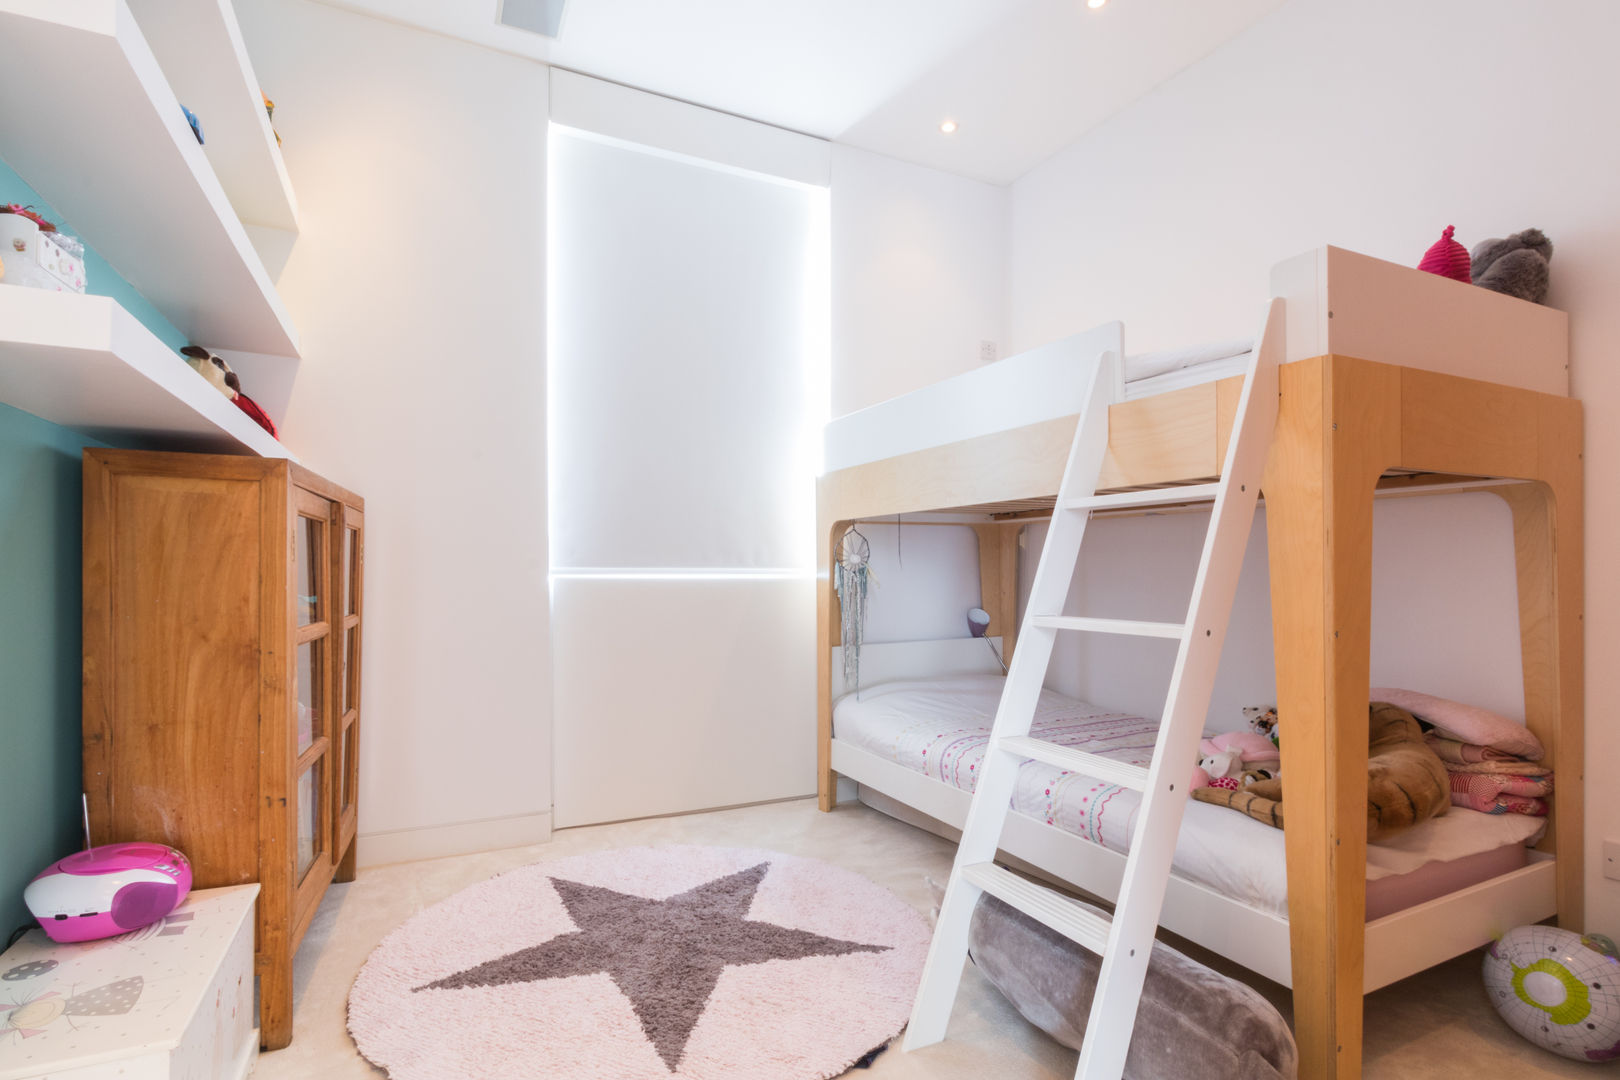 Kensington, SW5 - Renovation, TOTUS TOTUS Nursery/kid’s room